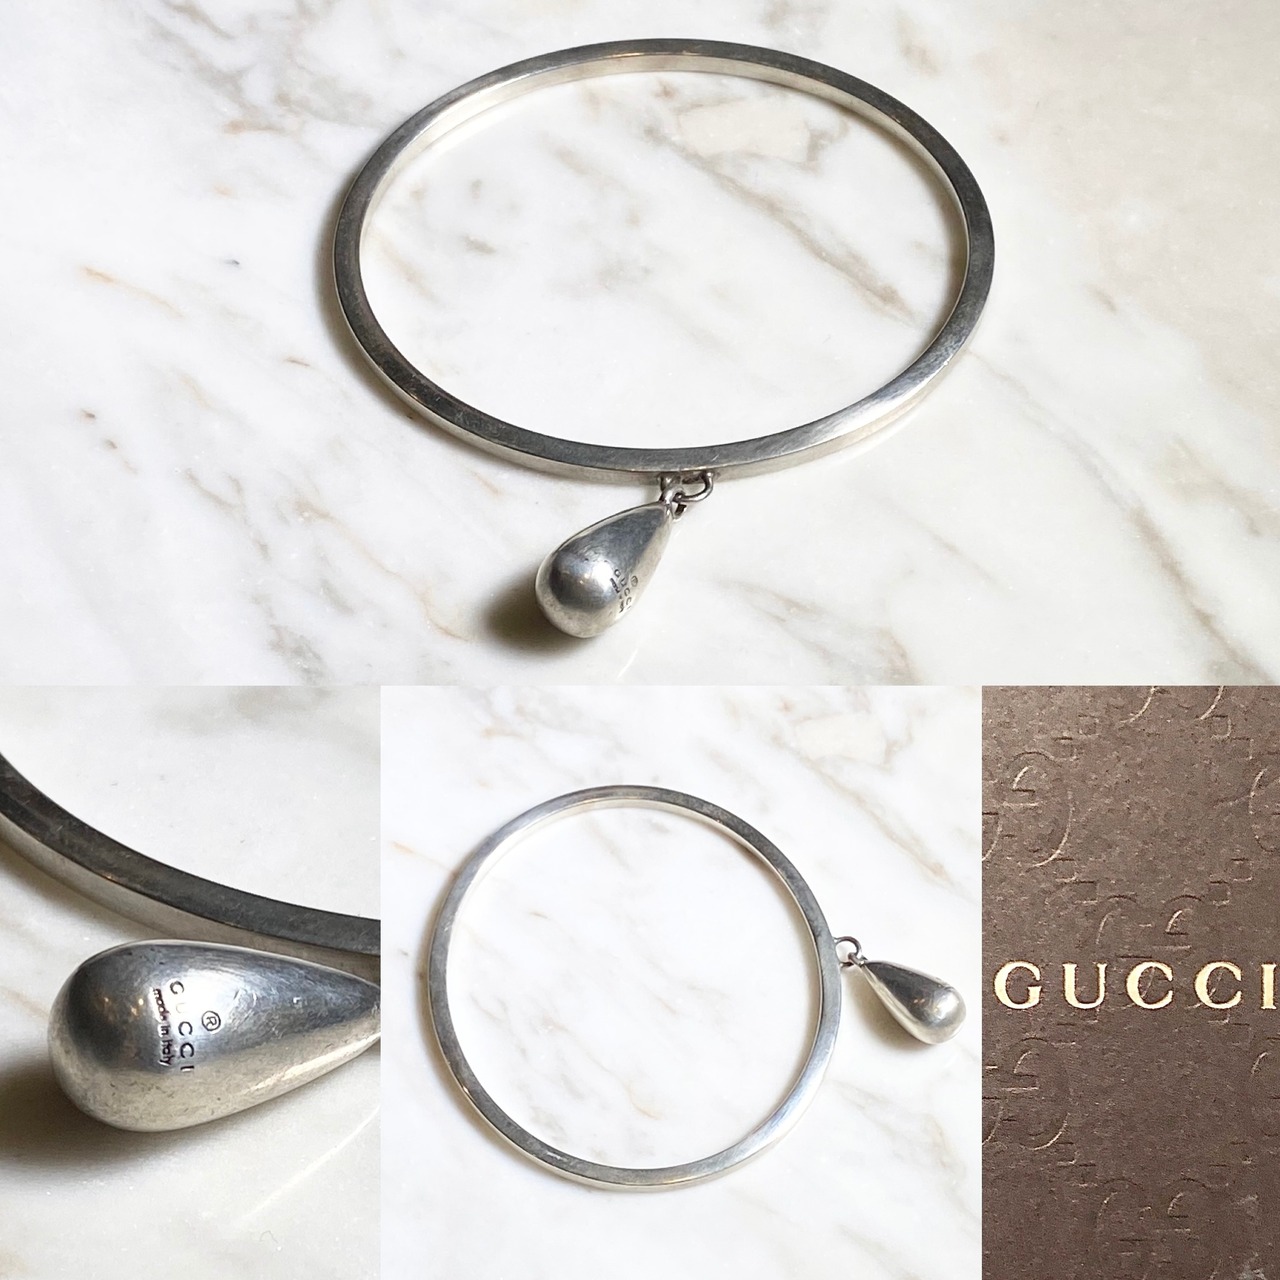 GUCCI silver narrow bangle with teardrop charm